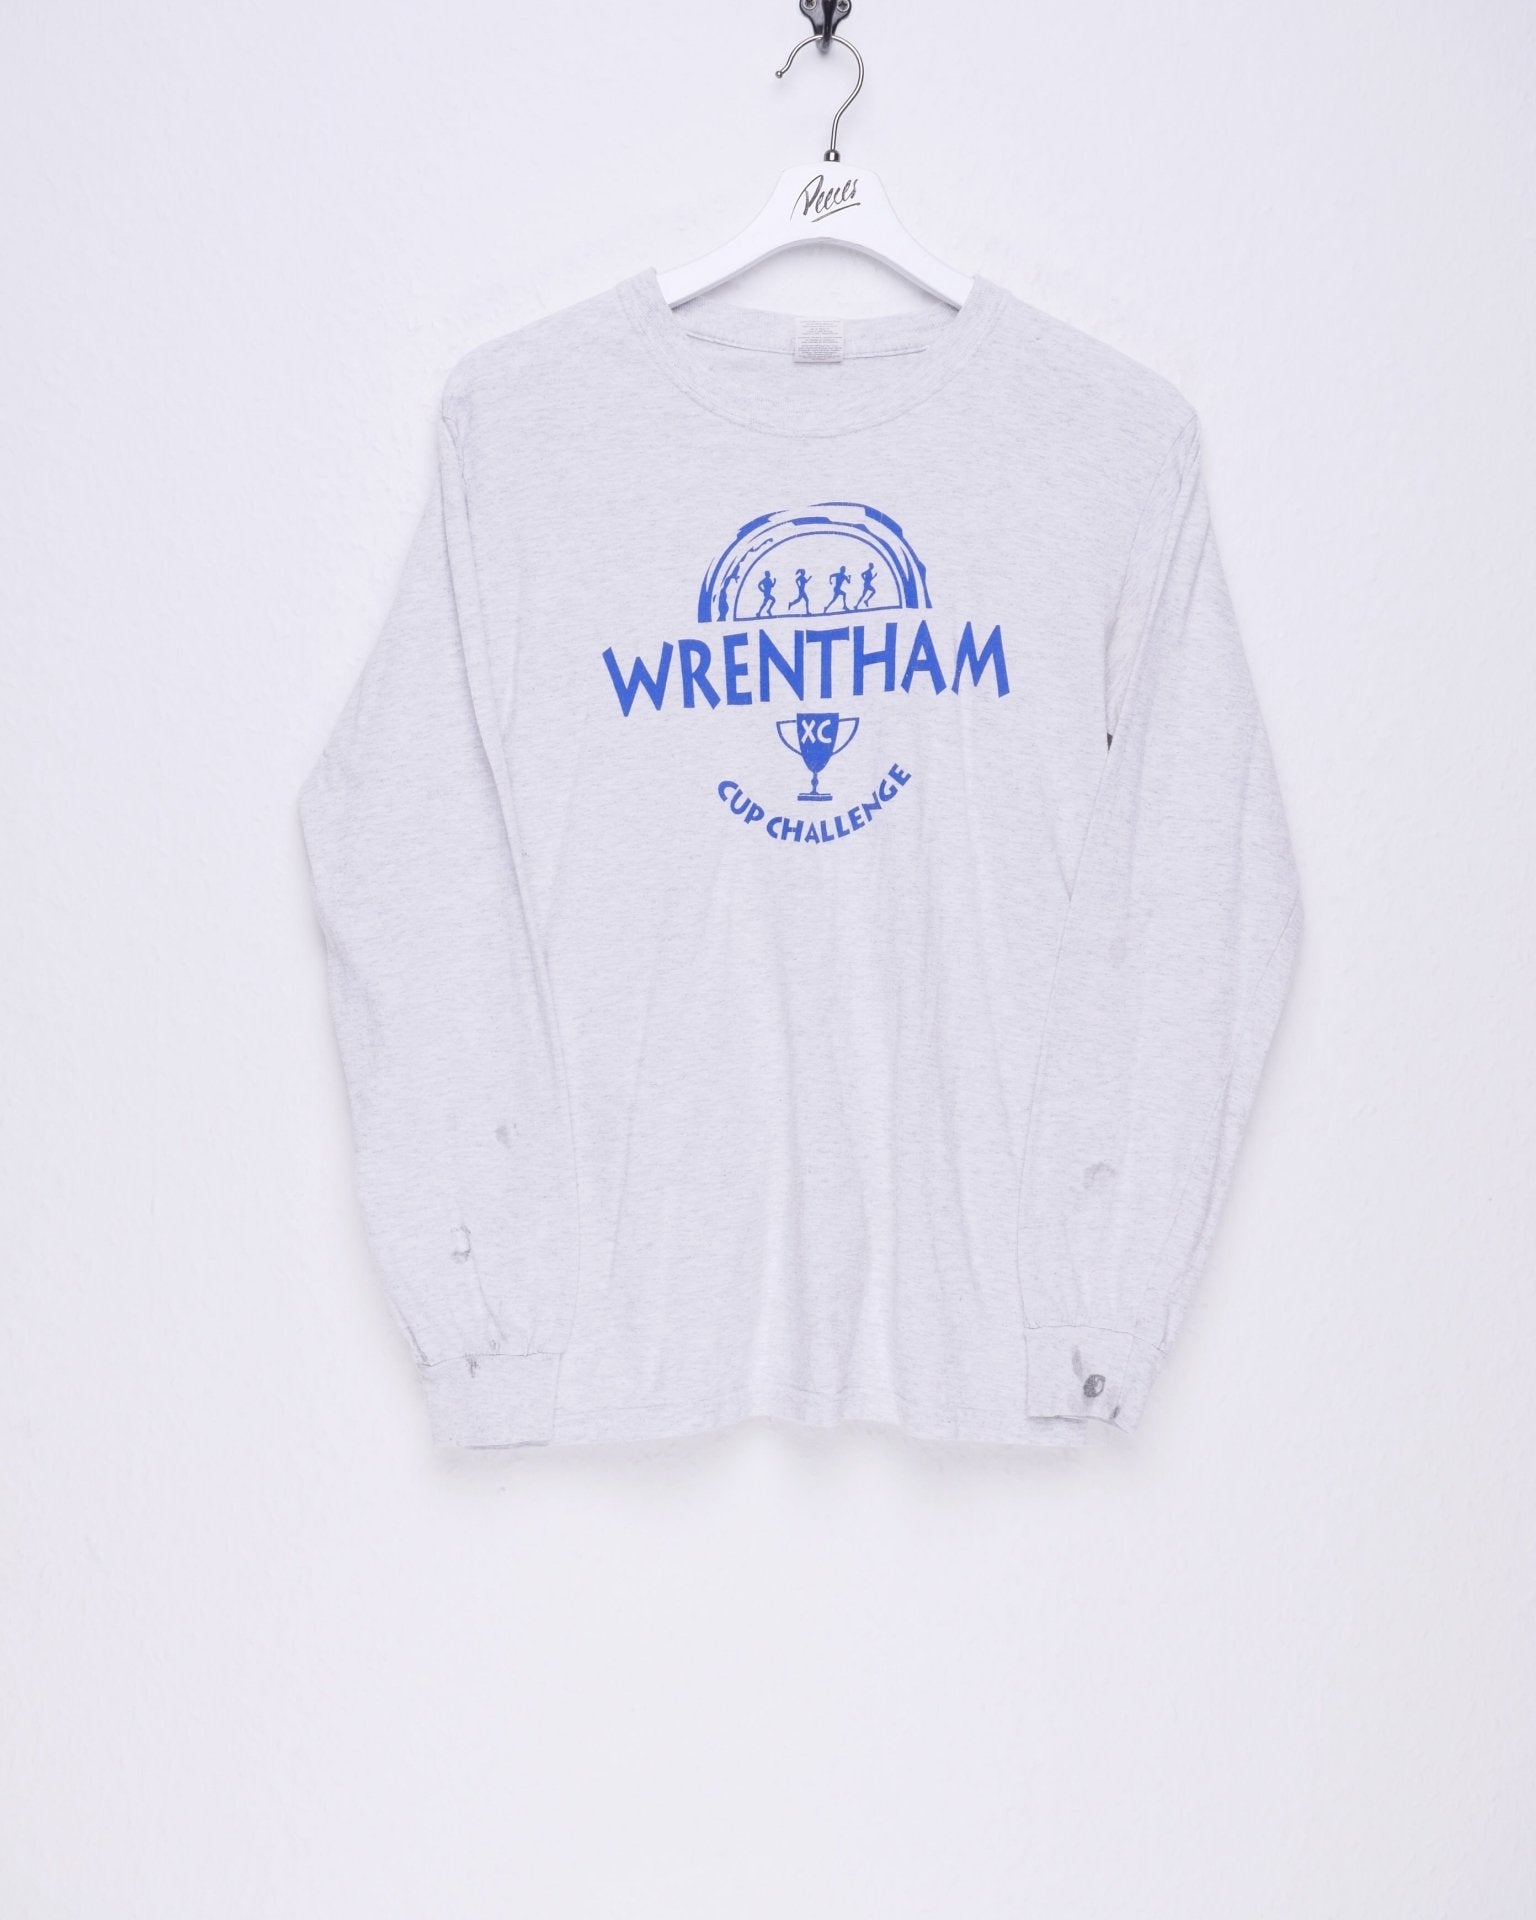 printed Logo 'Wrentham Cup Challenge' grey L/S Shirt - Peeces